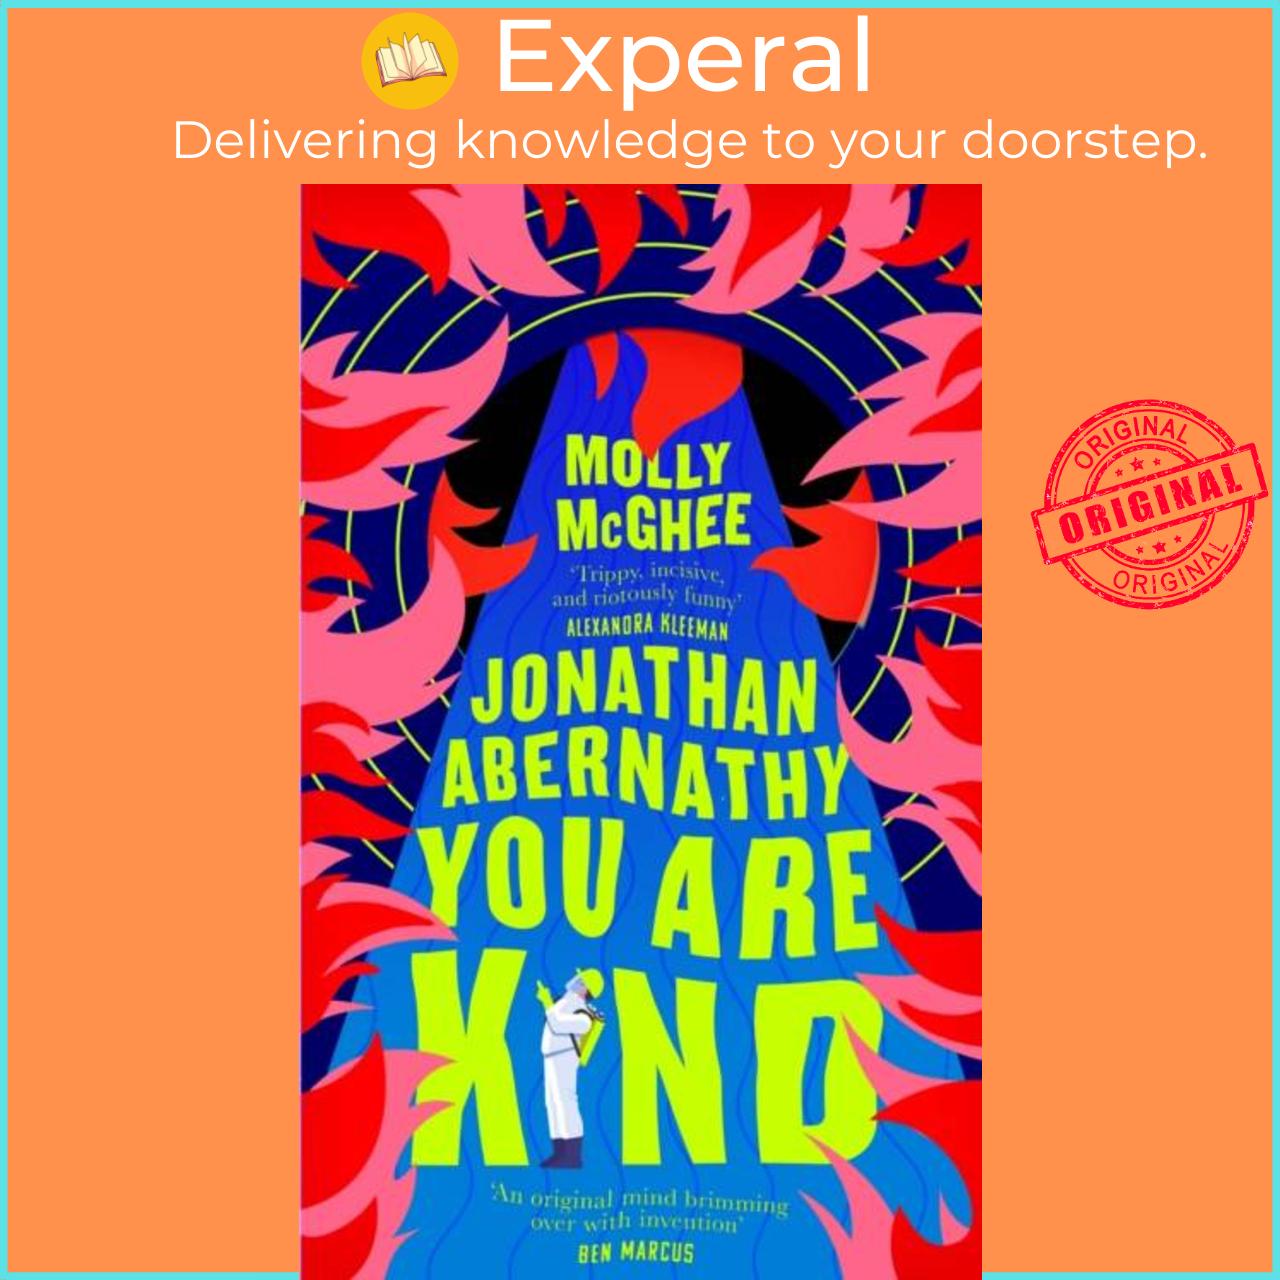 Hình ảnh Sách - Jonathan Abernathy You Are Kind by Molly McGhee (UK edition, paperback)